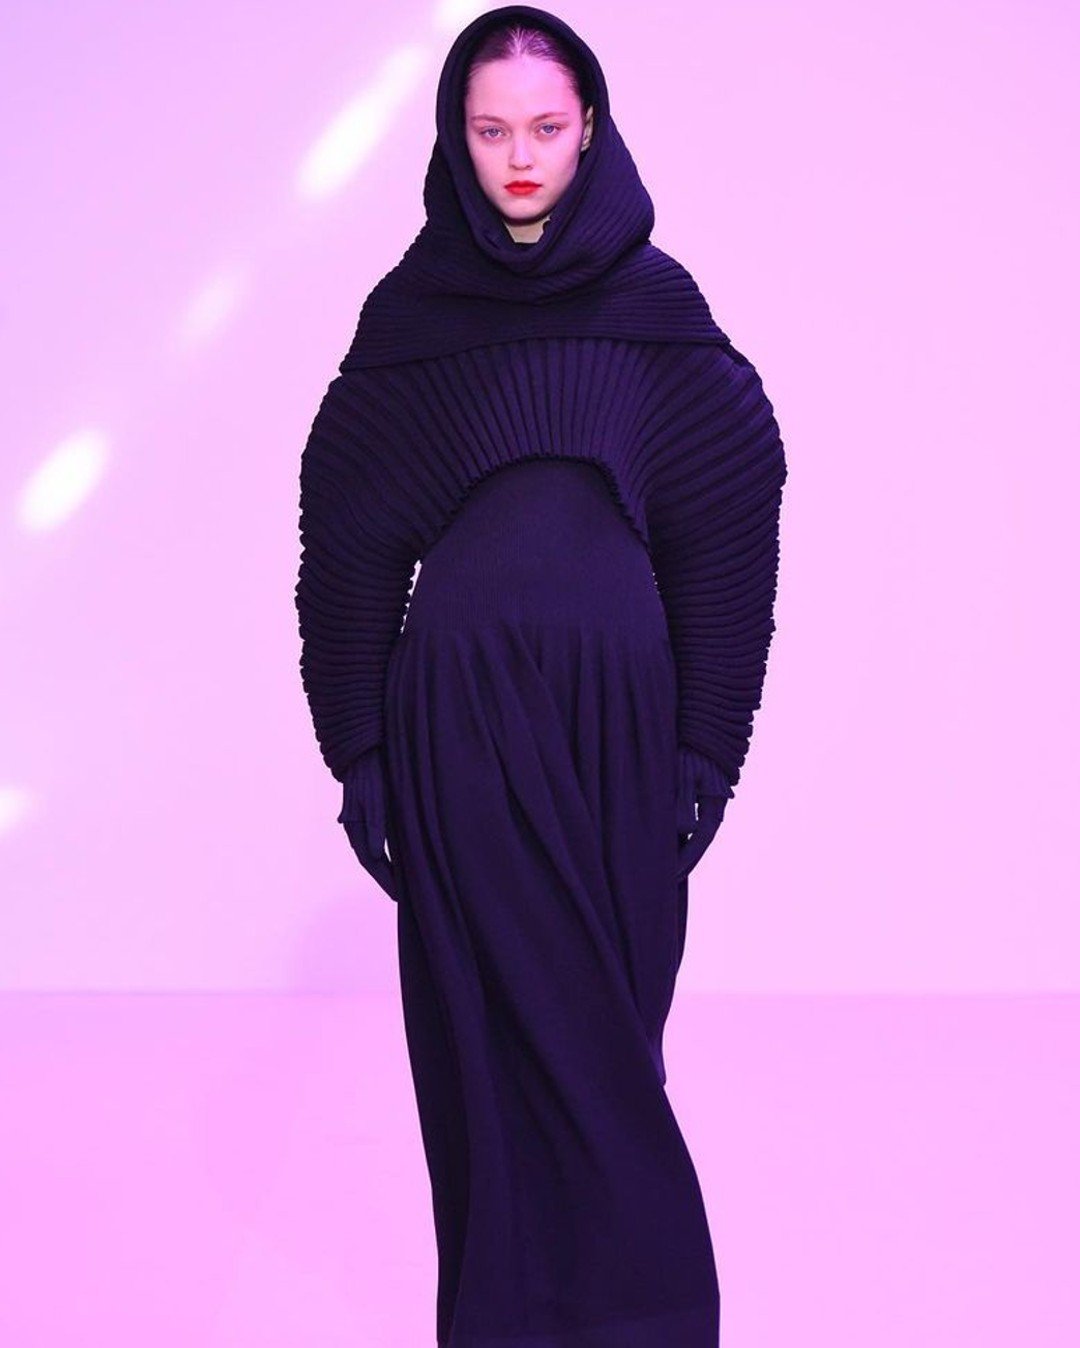 cfcl - tricot - Paris Fashion Week - inverno - Paris - https://stealthelook.com.br